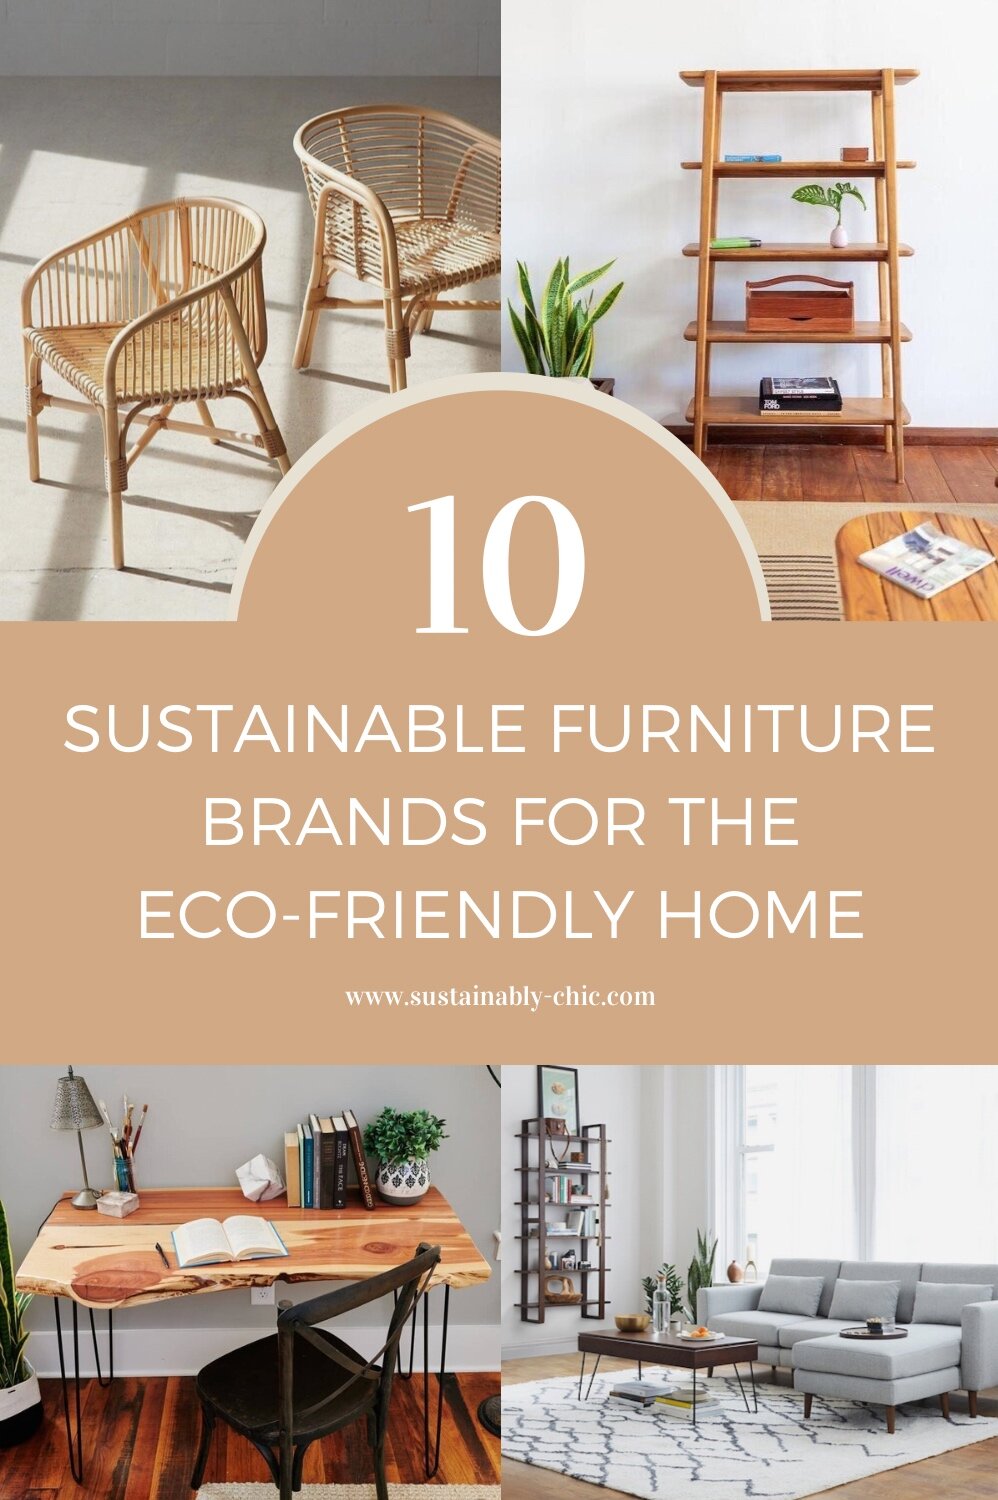 bob网appsustainable-furniture-companies